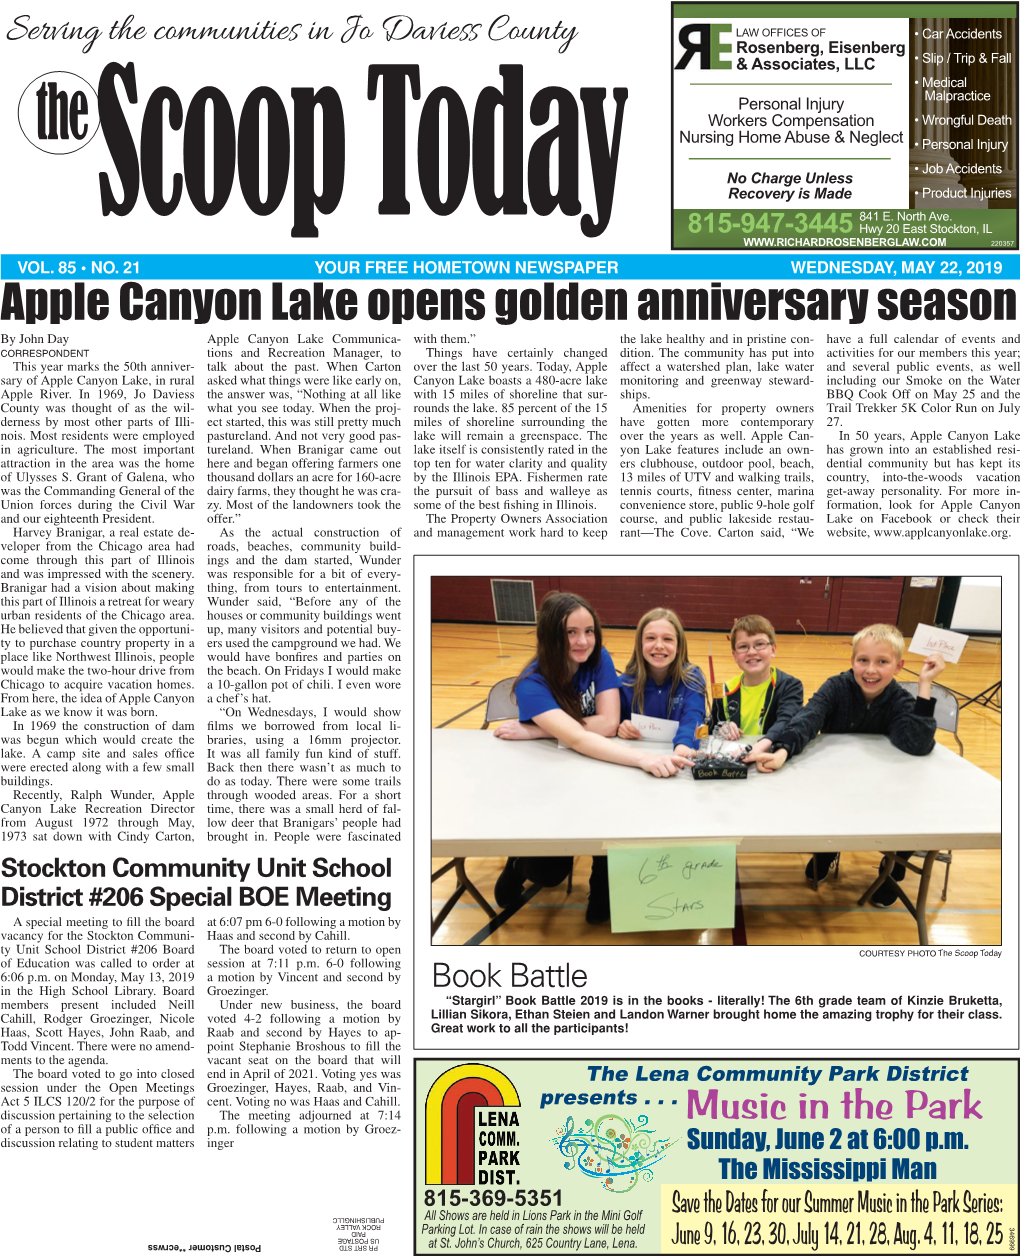 Apple Canyon Lake Opens Golden Anniversary Season